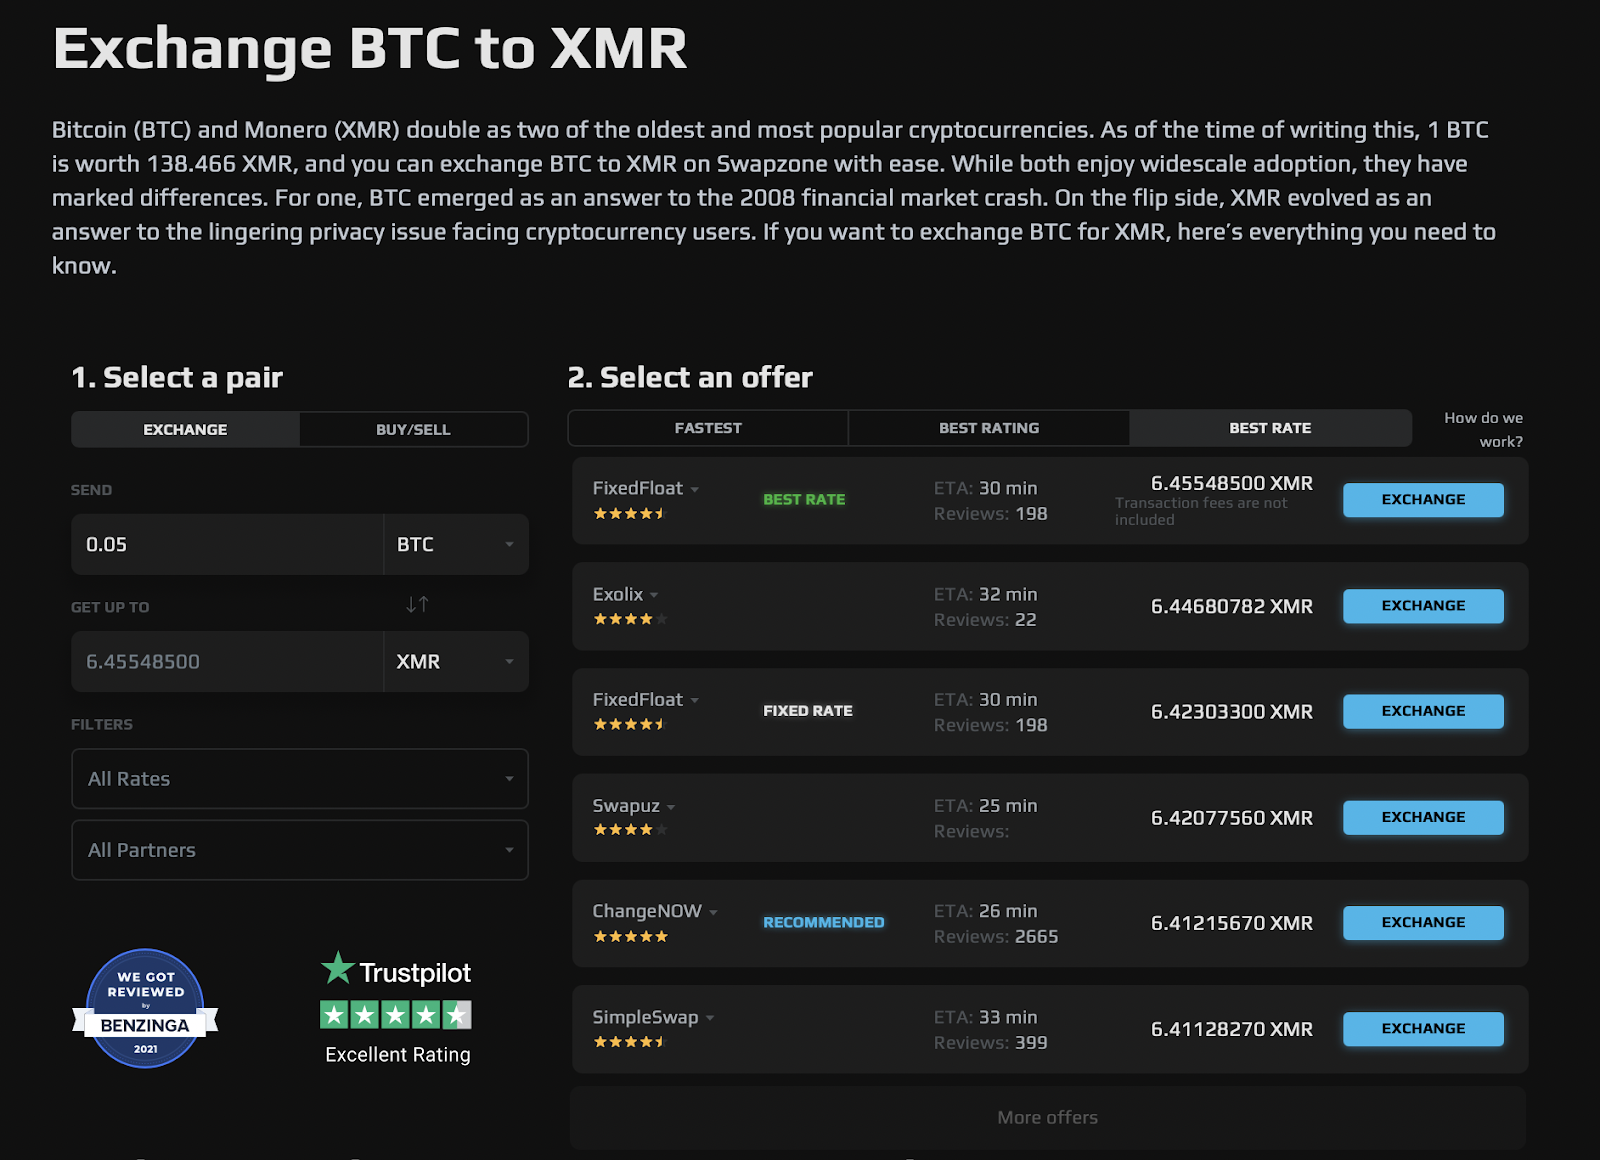 How to Exchange BTC for XMR?